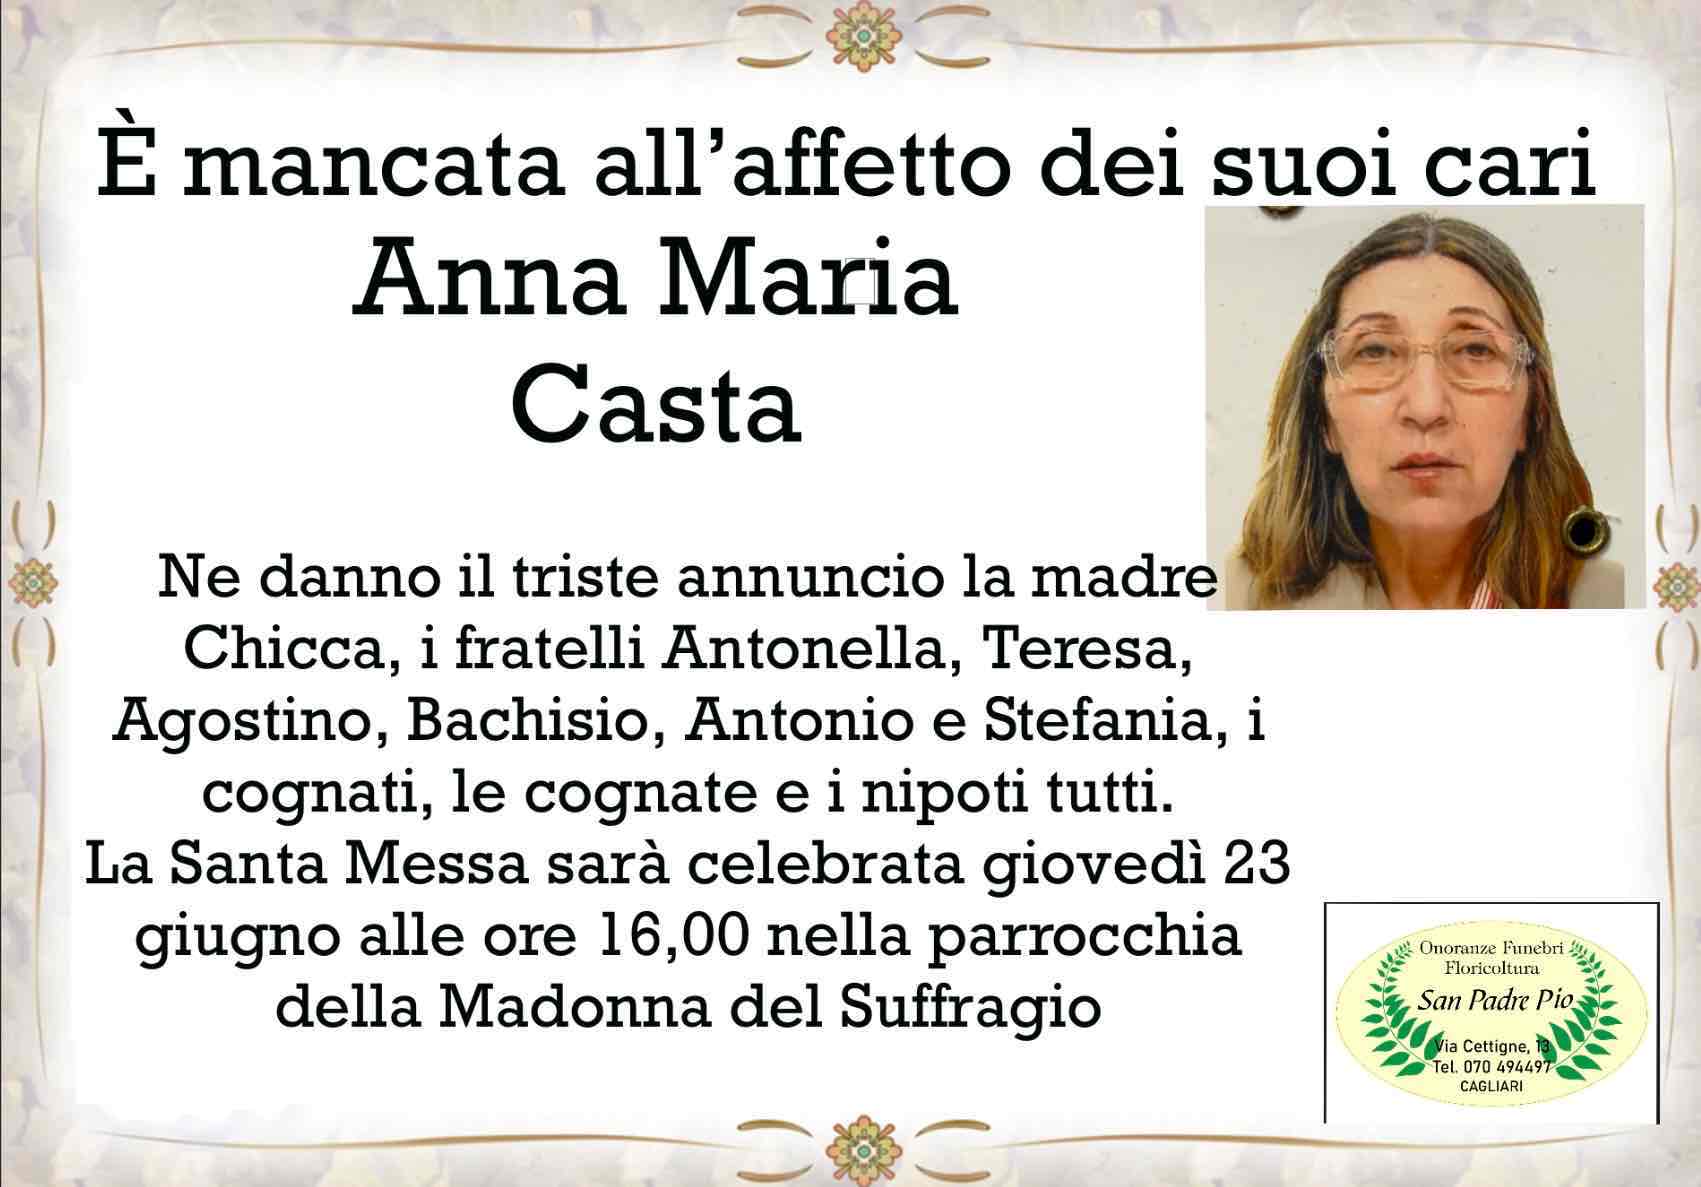 Anna Maria Casta